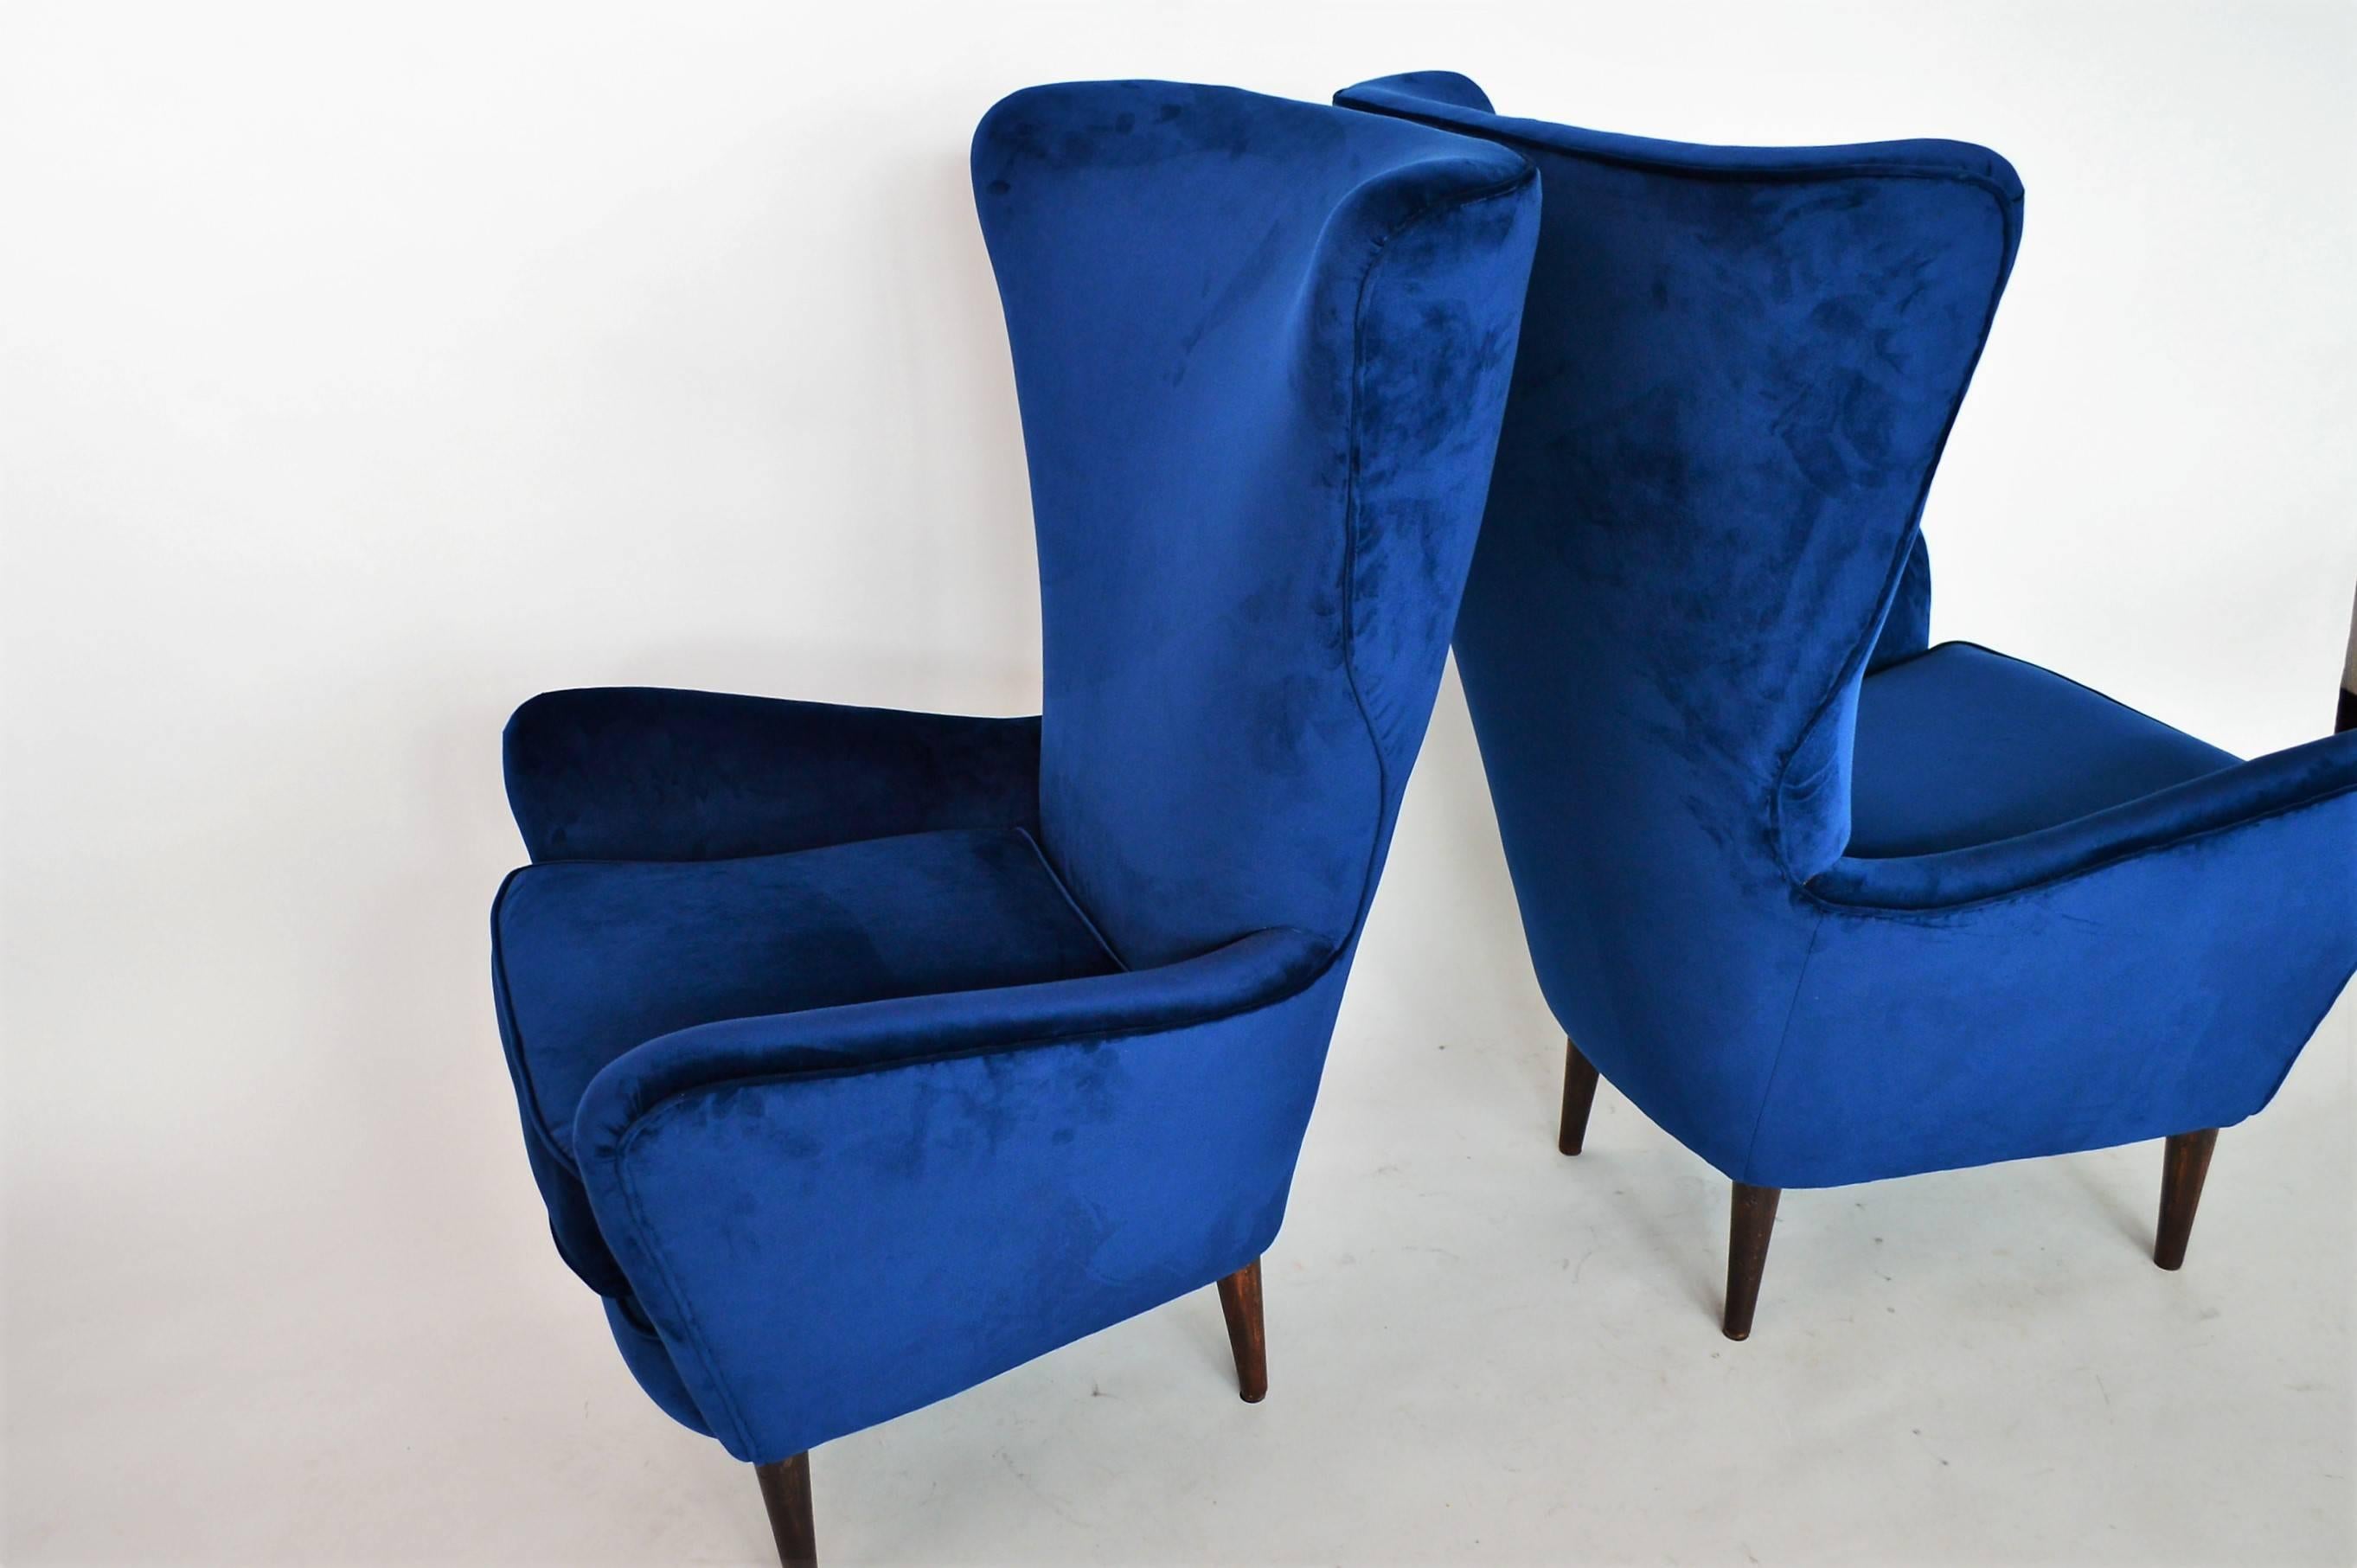 Mid-20th Century Italian Midcentury Armchairs Restored with Royal-Blue Velvet, 1950s